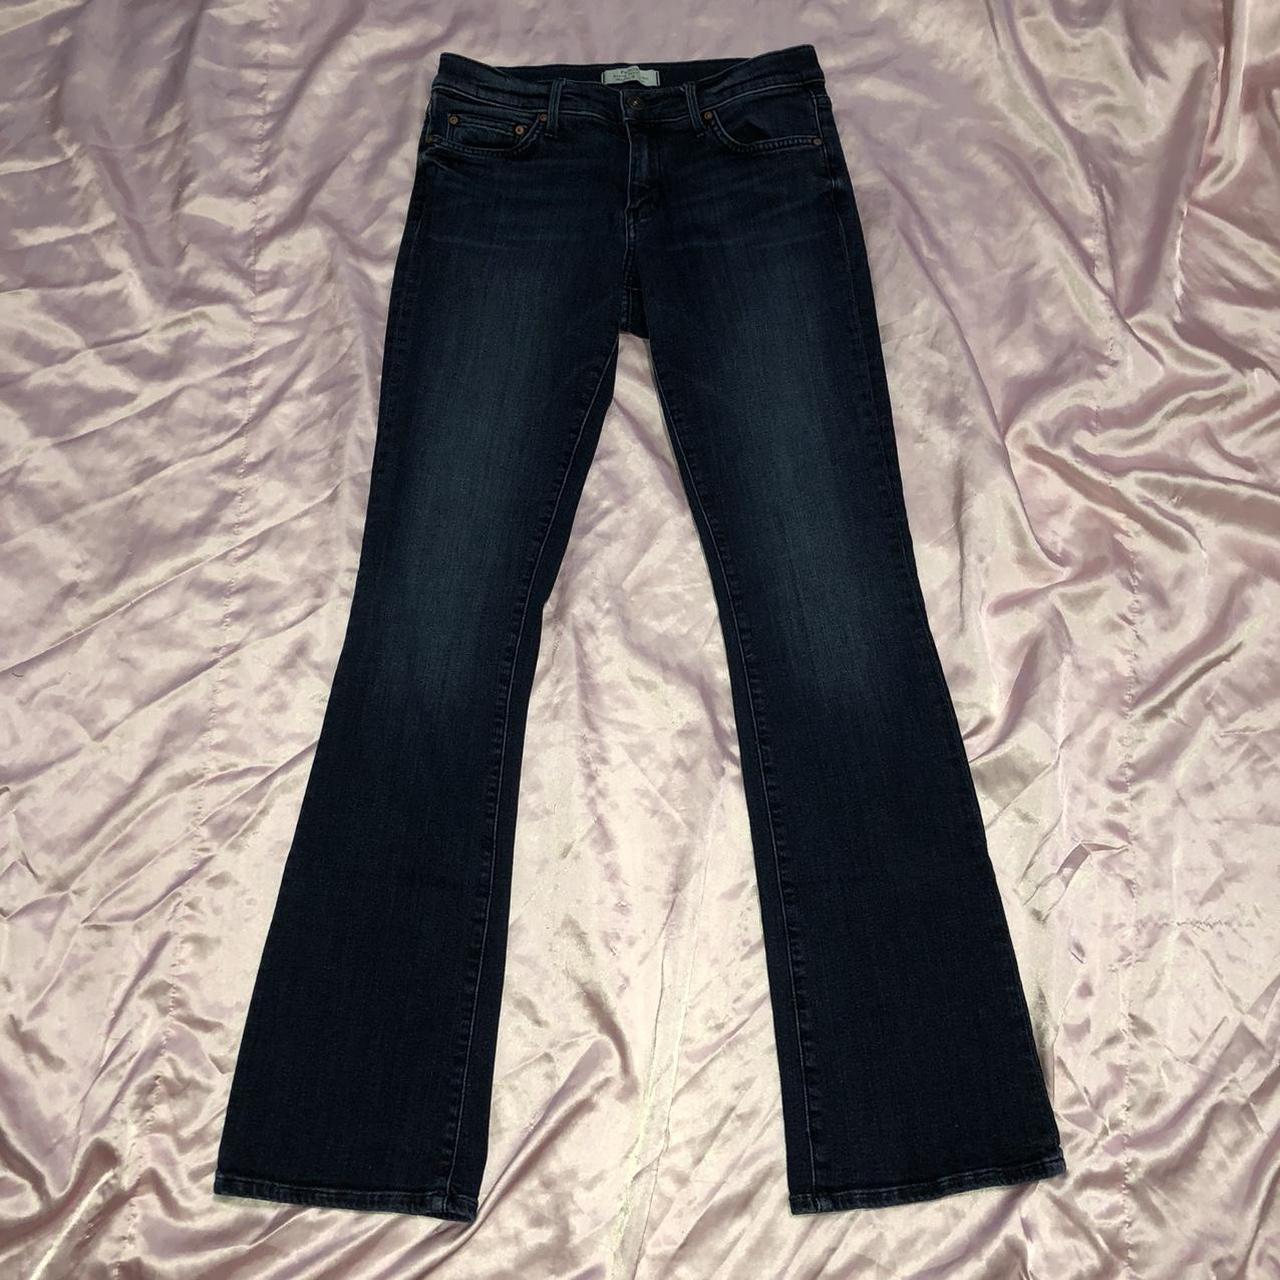 Product Image 1 - Principle Denim Innovators jeans

Principle Denim